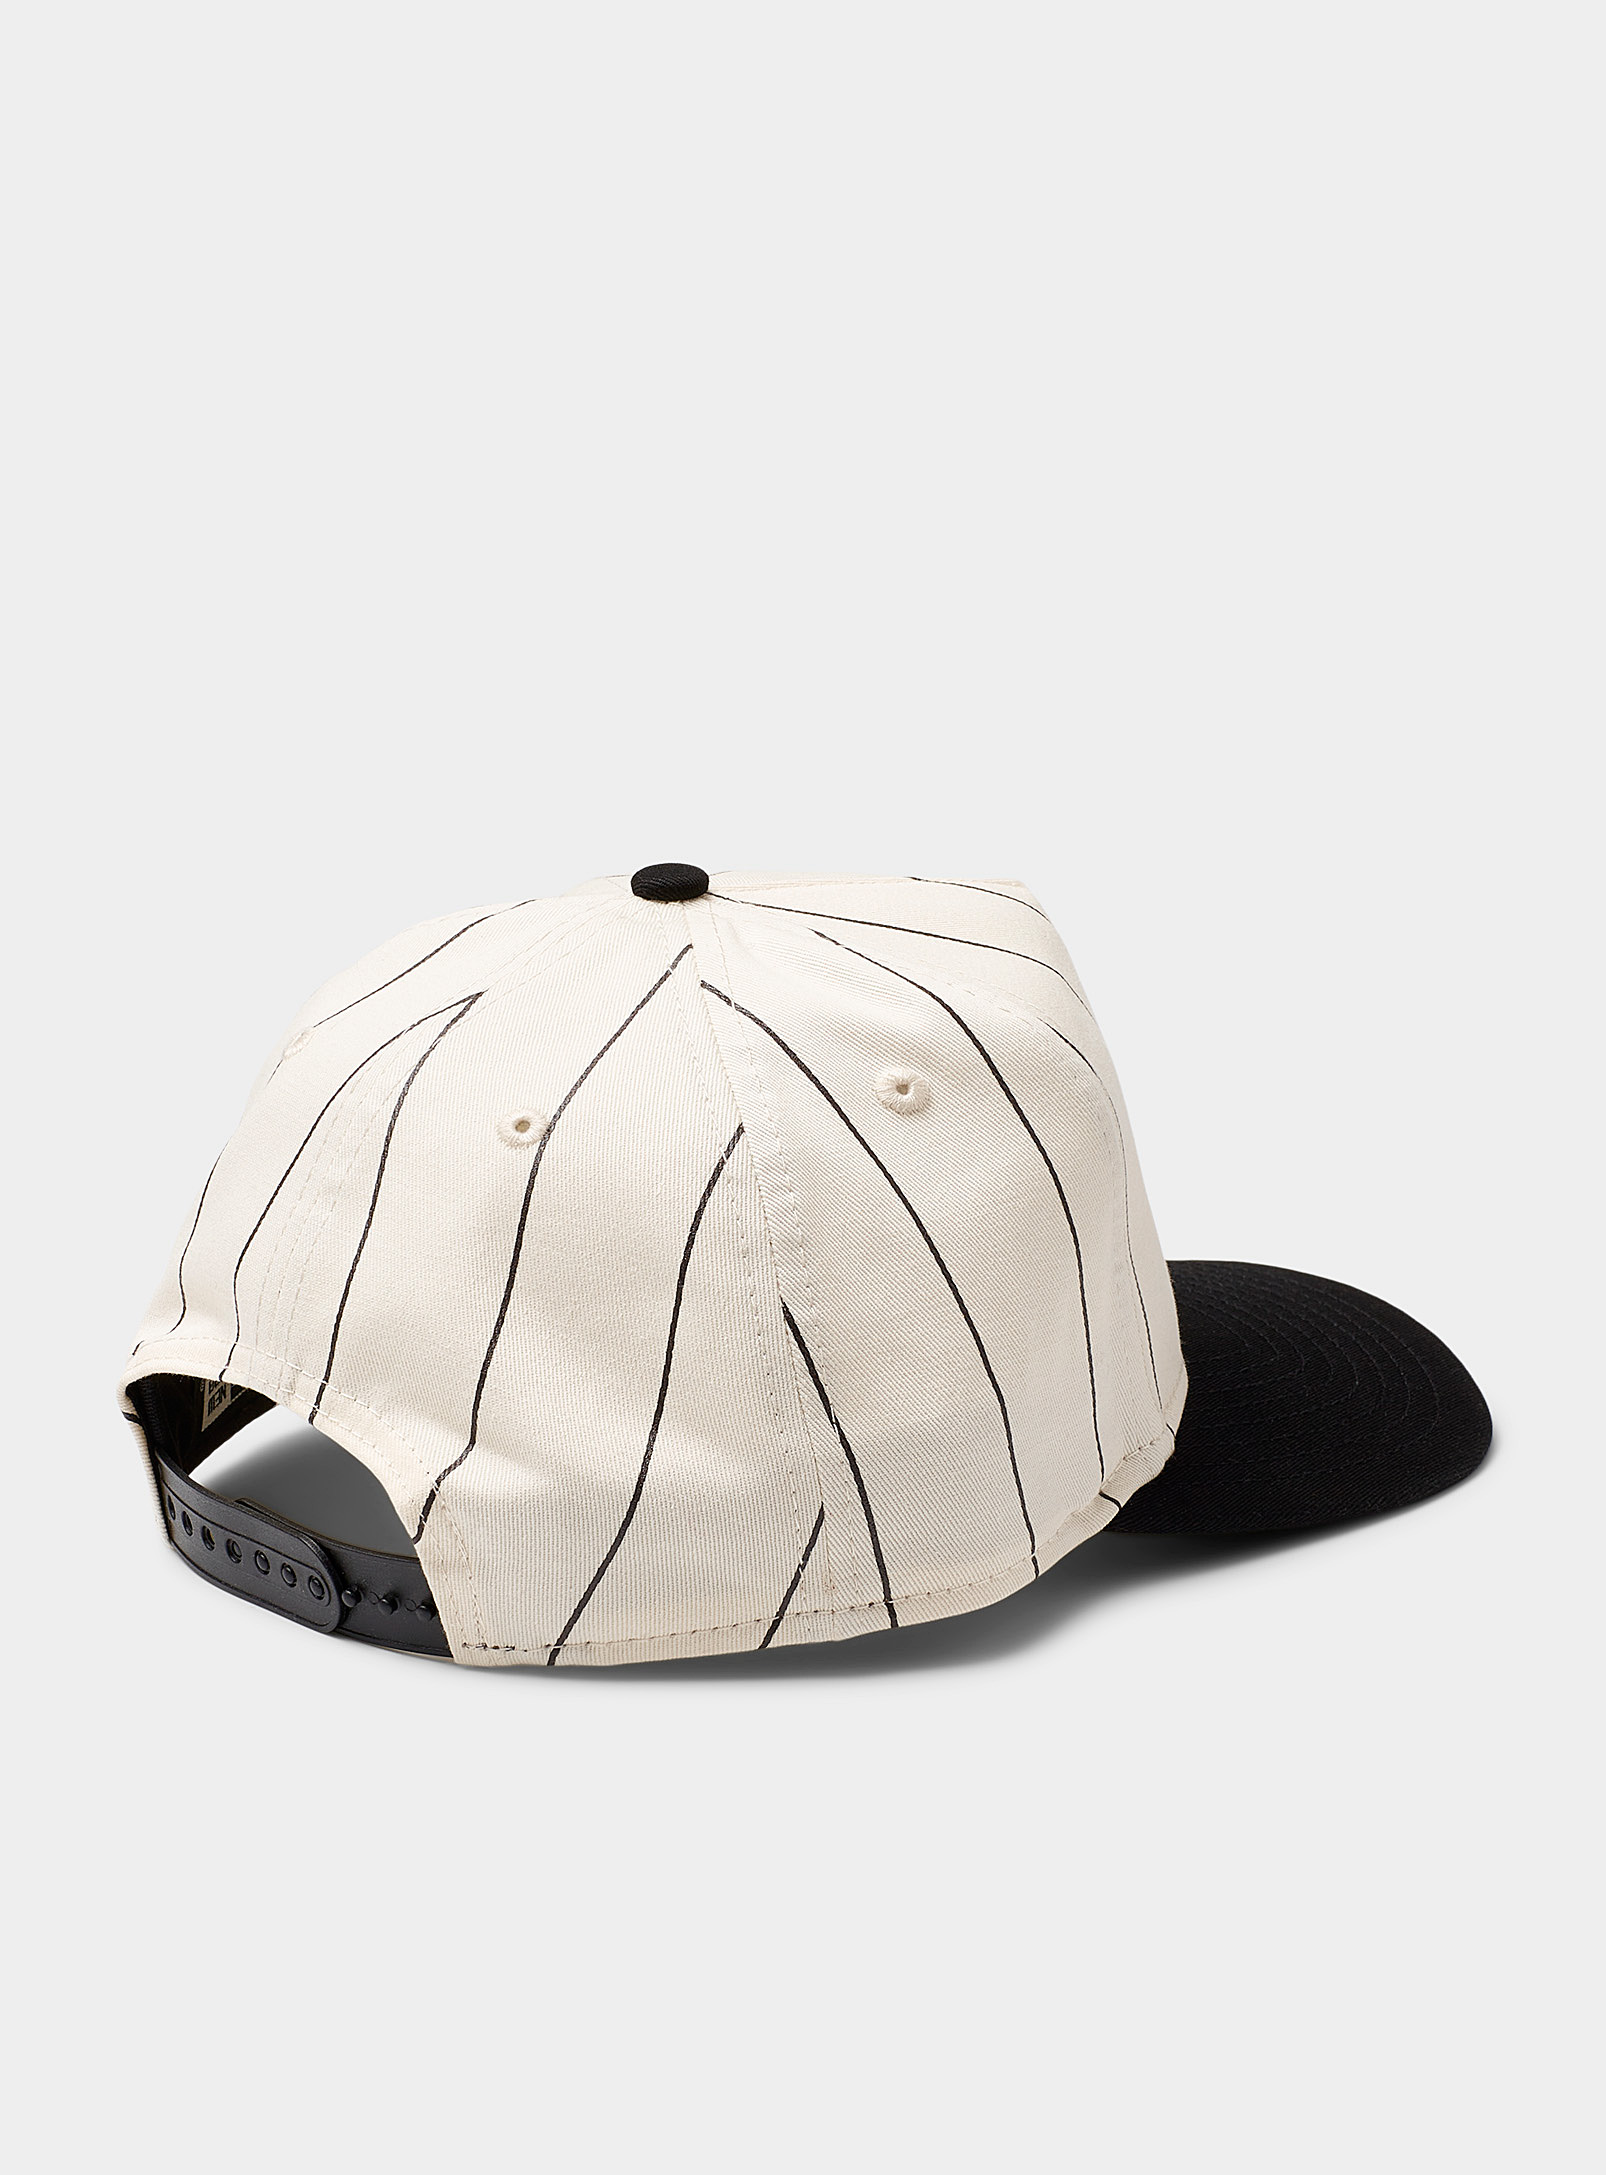 New Era - La casquette baseball Yankees